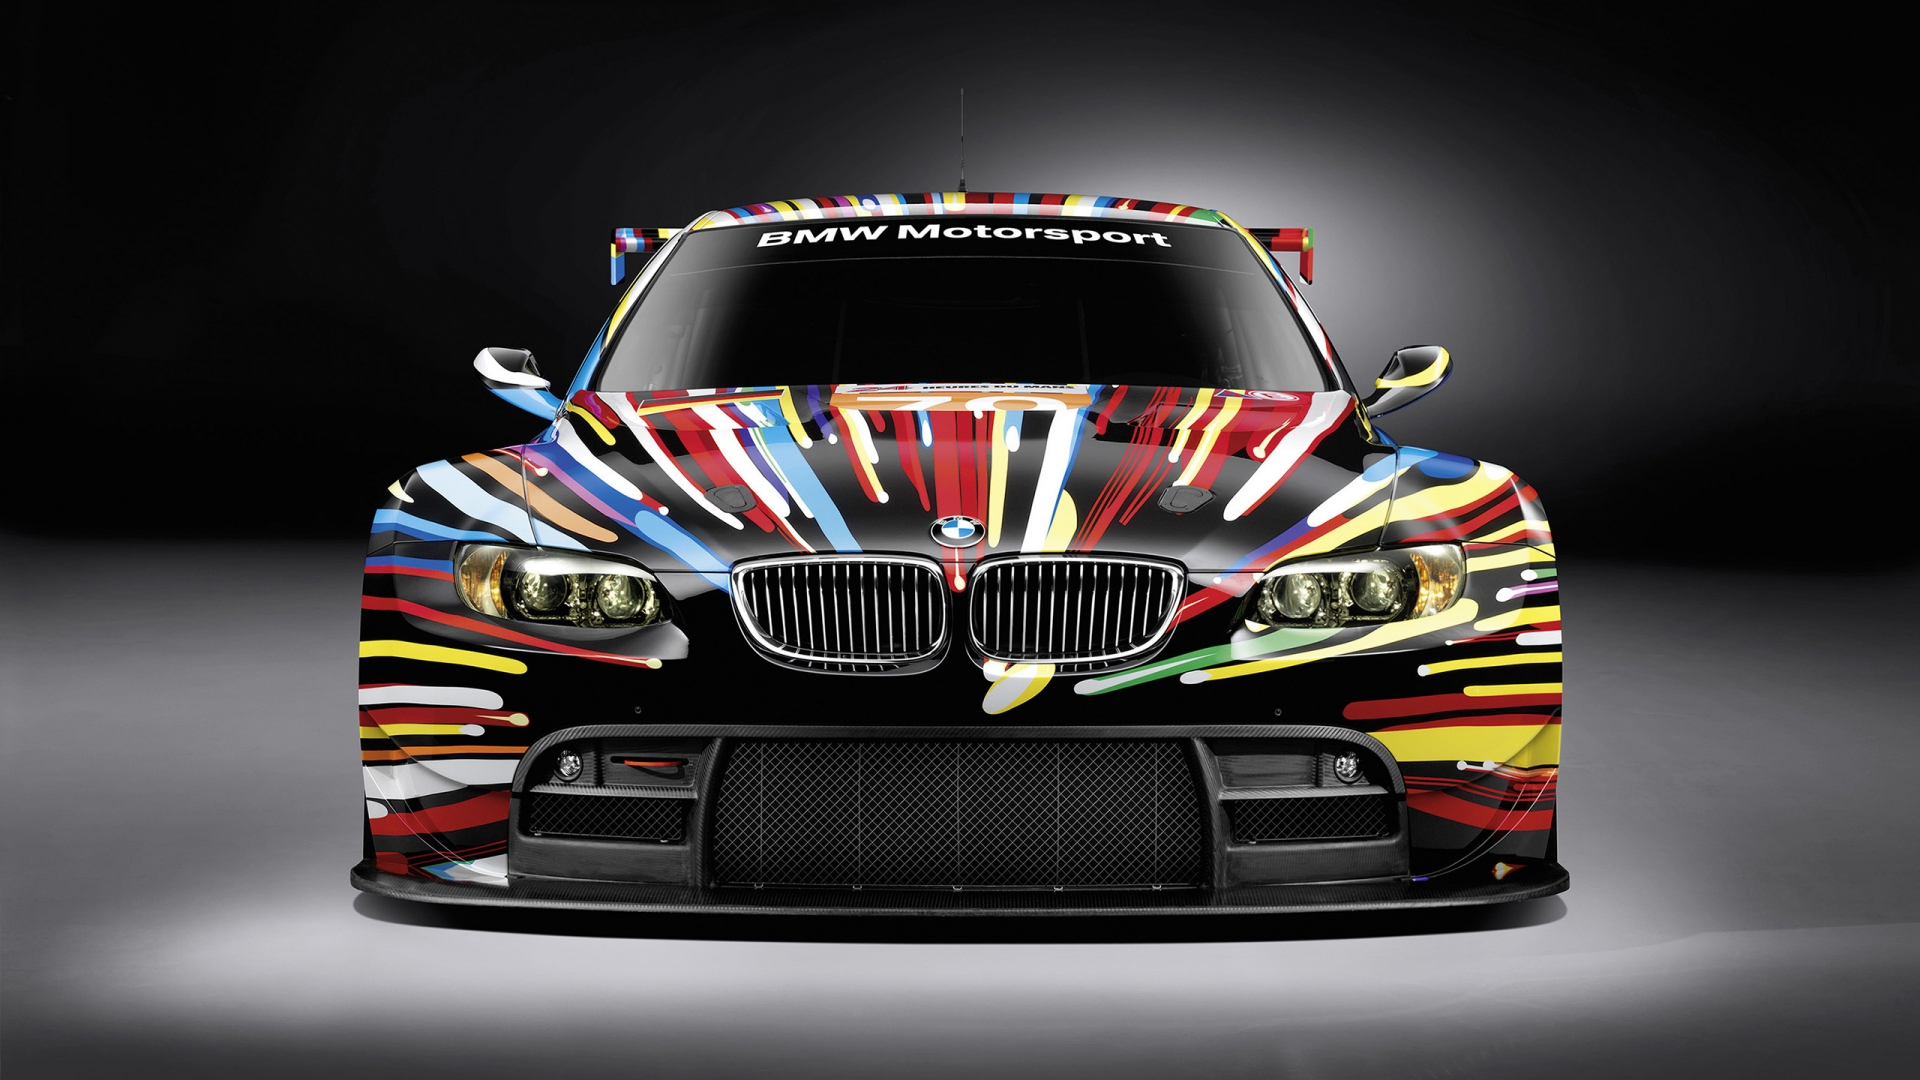 BMW M3 GT 2 Art for 1920 x 1080 HDTV 1080p resolution